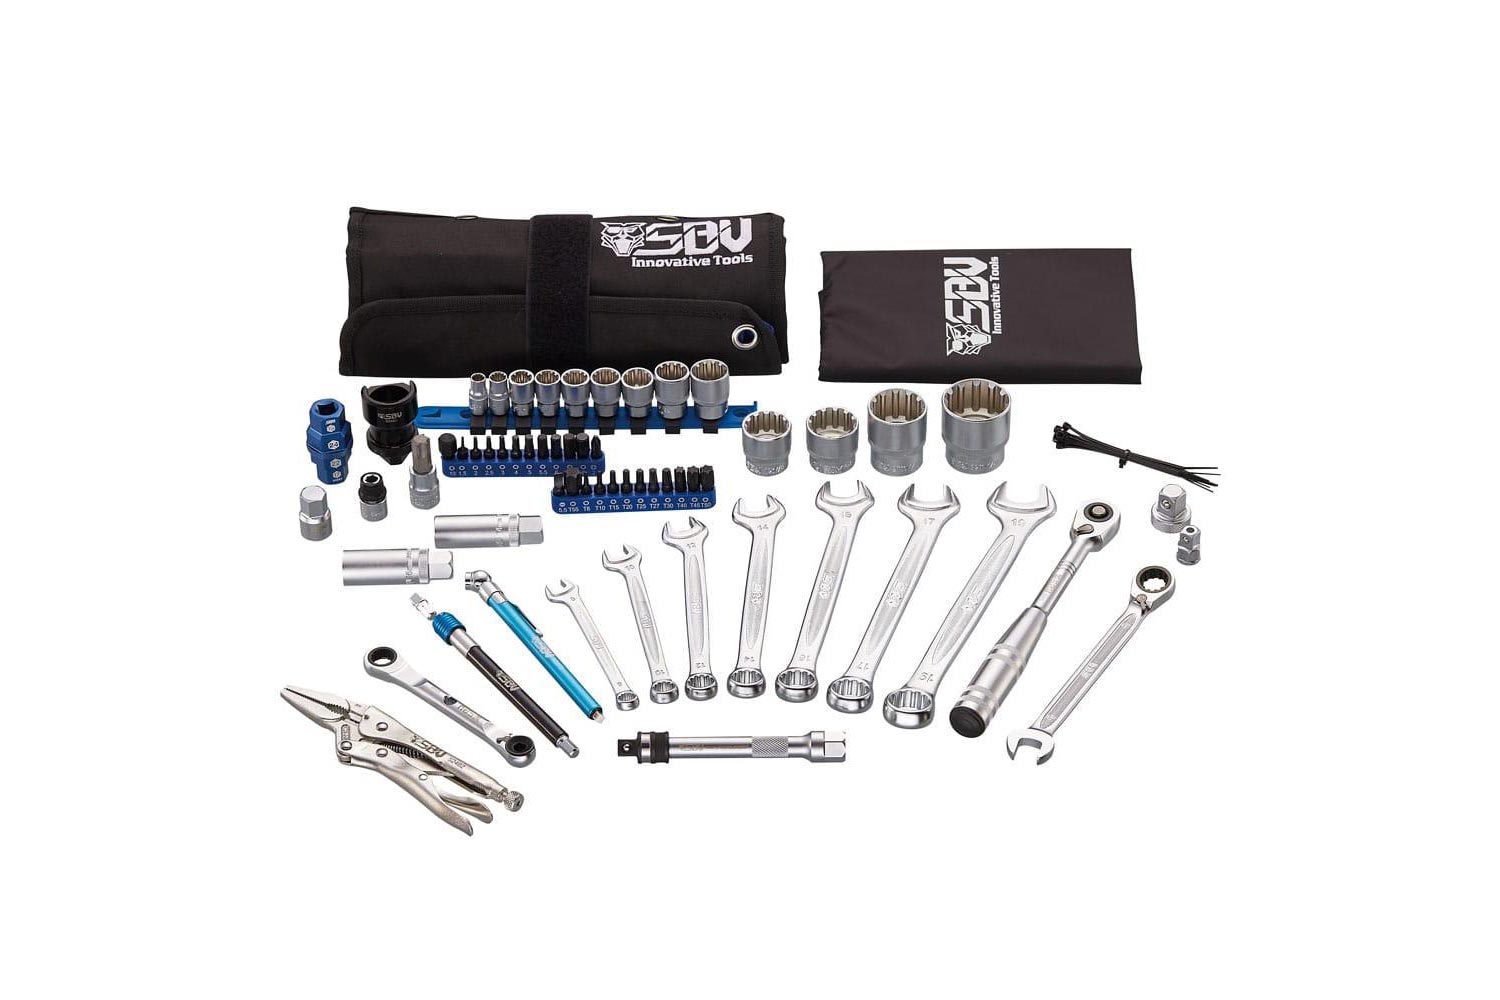 Tool Set - All Motorcycles Pro Kit